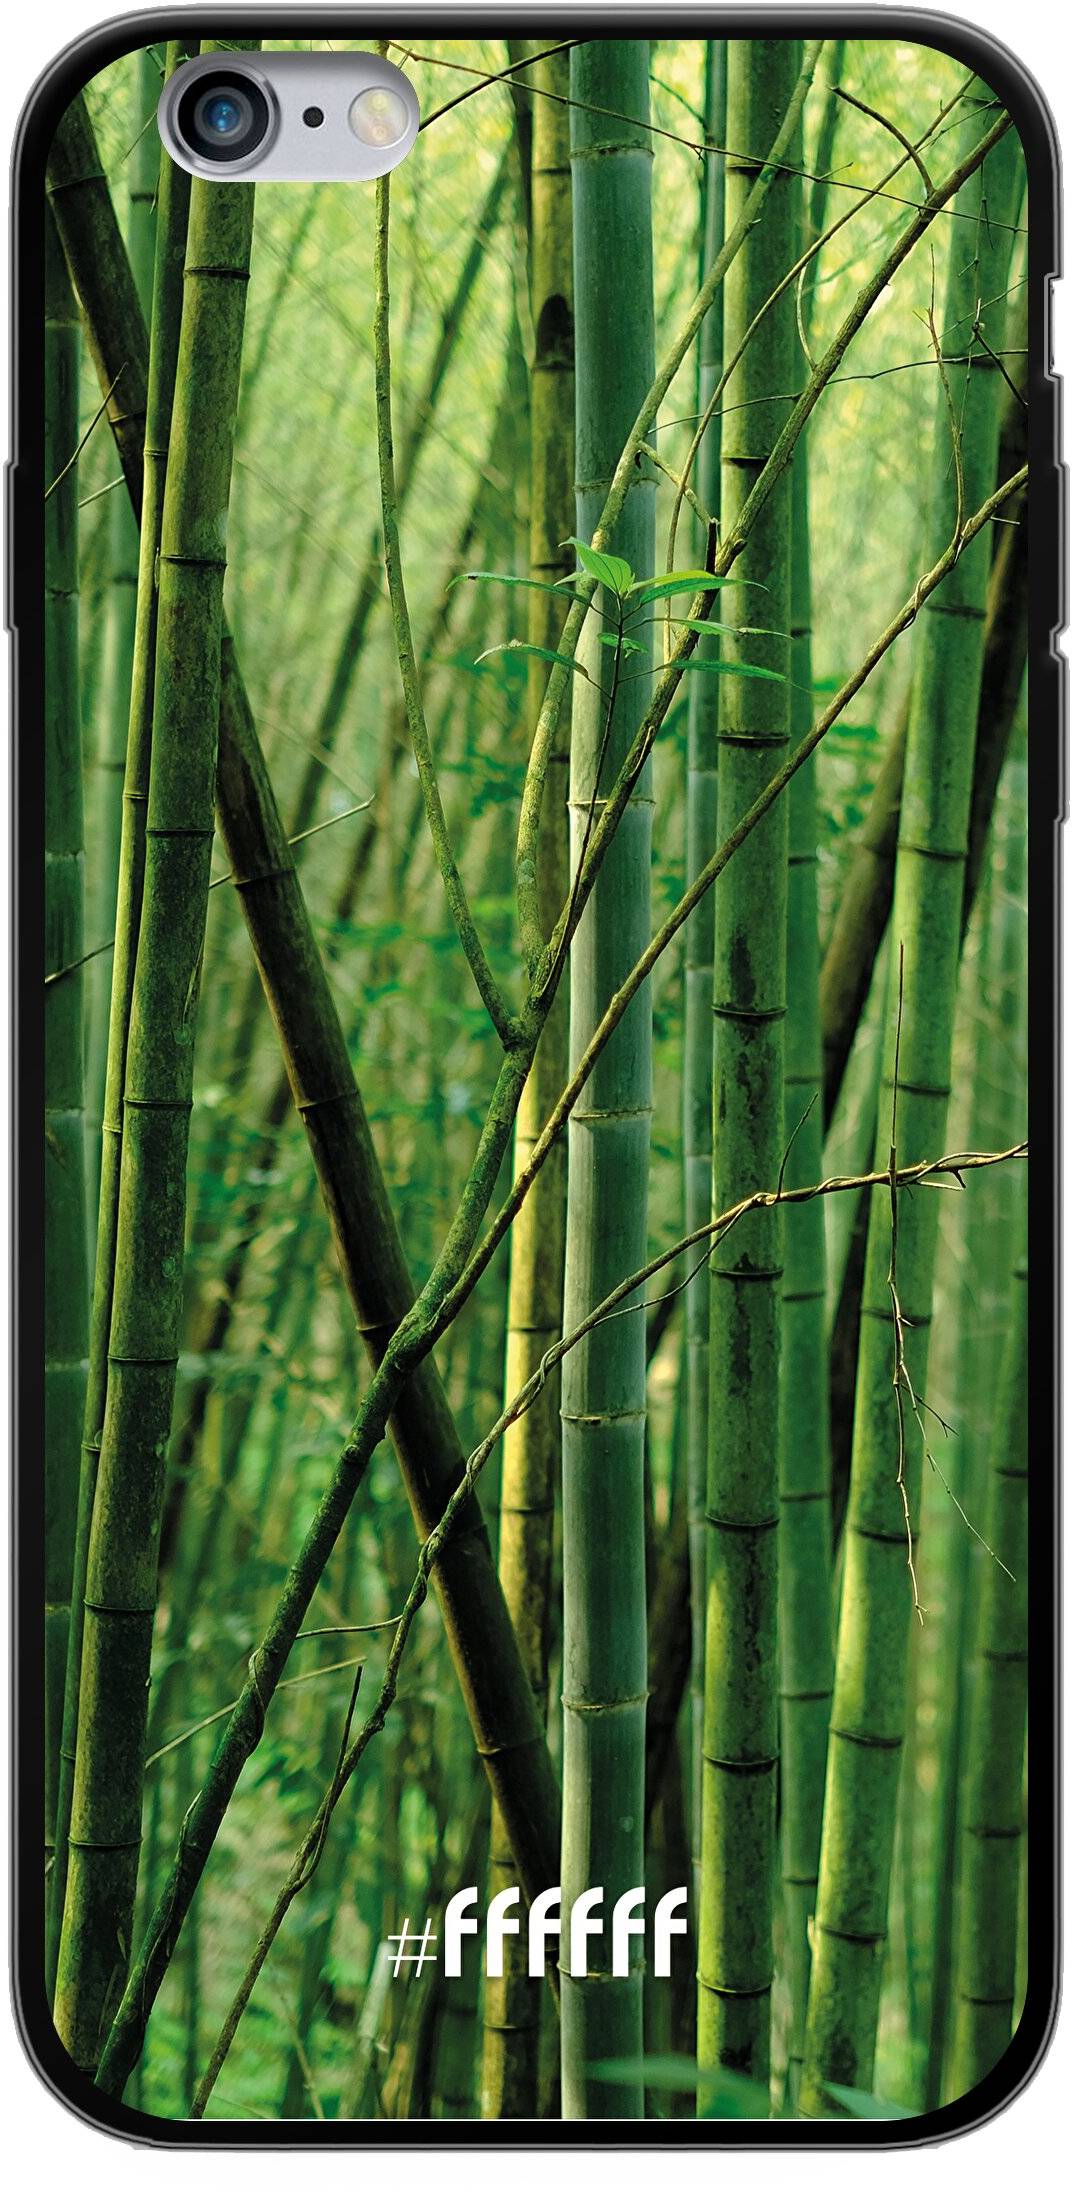 Bamboo iPhone 6s